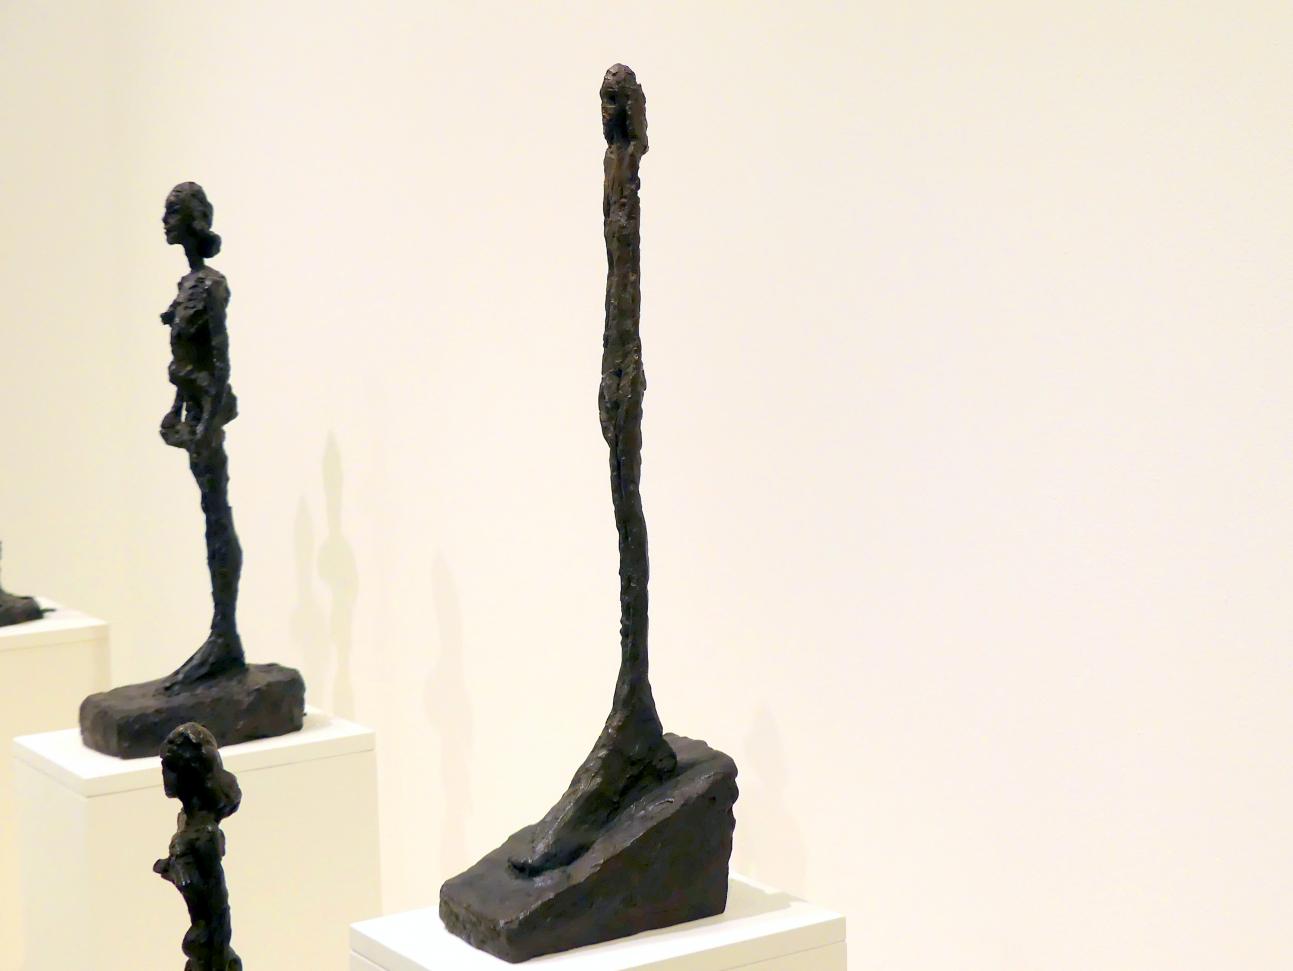 Alberto Giacometti (1914–1965), Stehende Frau, Prag, Nationalgalerie im Messepalast, Ausstellung "Alberto Giacometti" vom 18.07.-01.12.2019, Stehende Figuren, um 1952, Bild 3/4